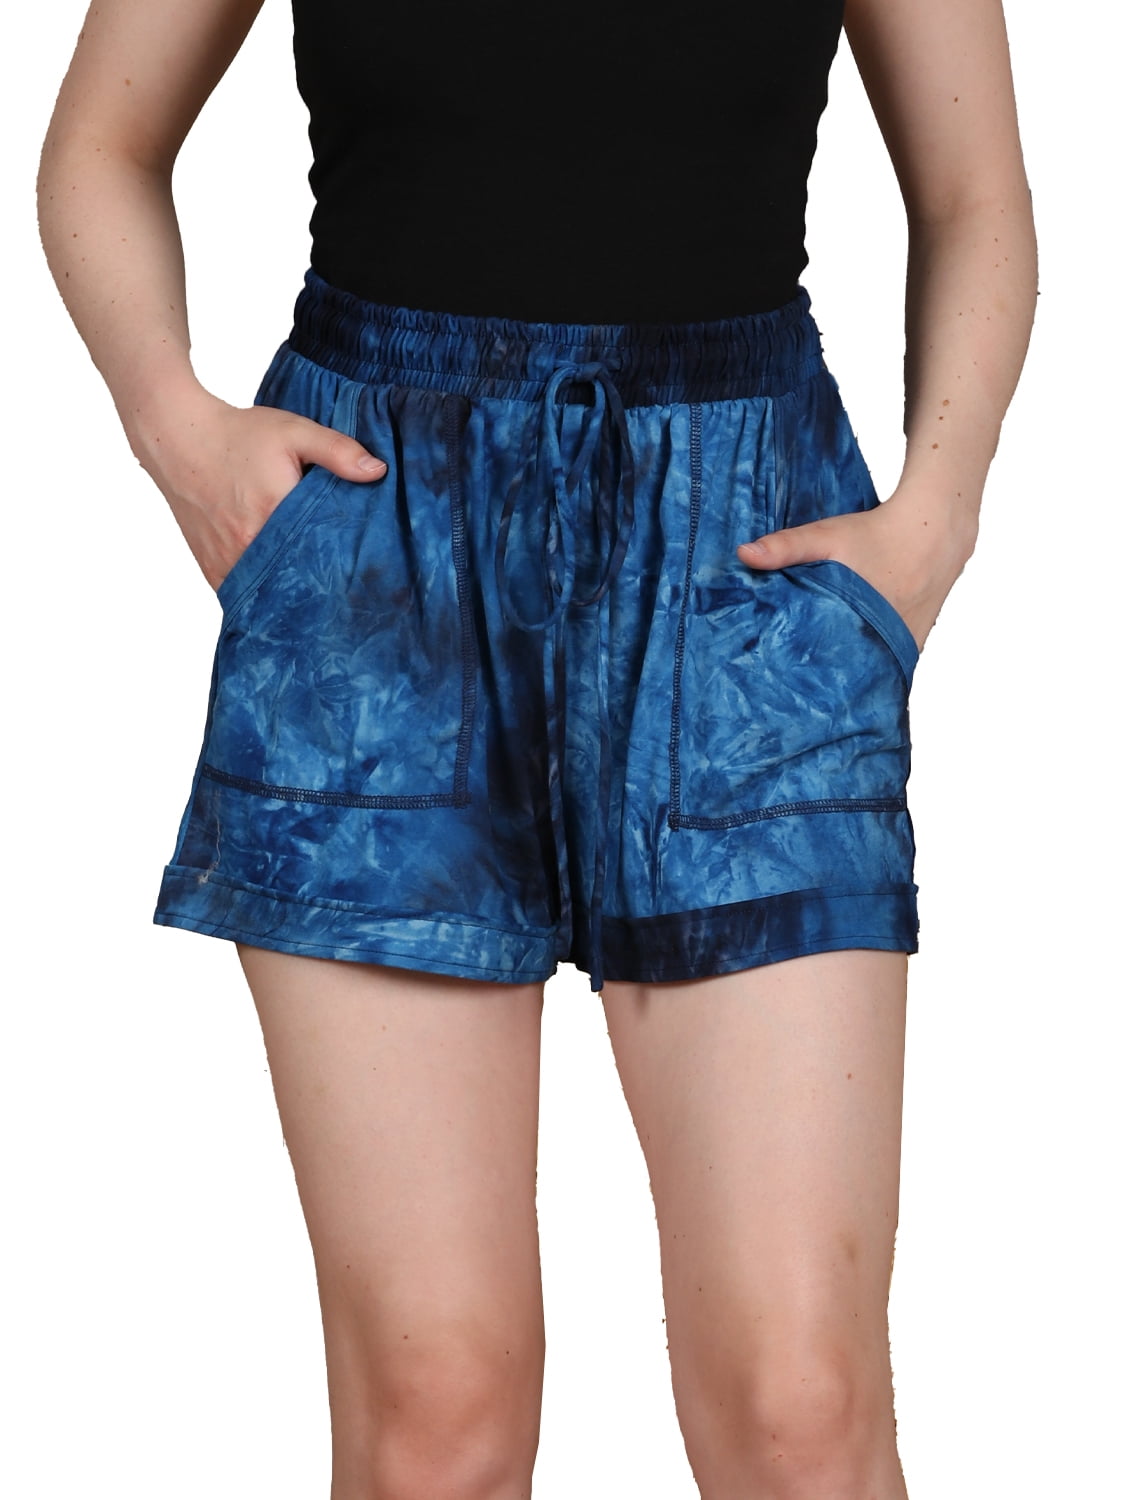 Doublju Women's Elastic Waist Comfy Casual Summer Shorts with